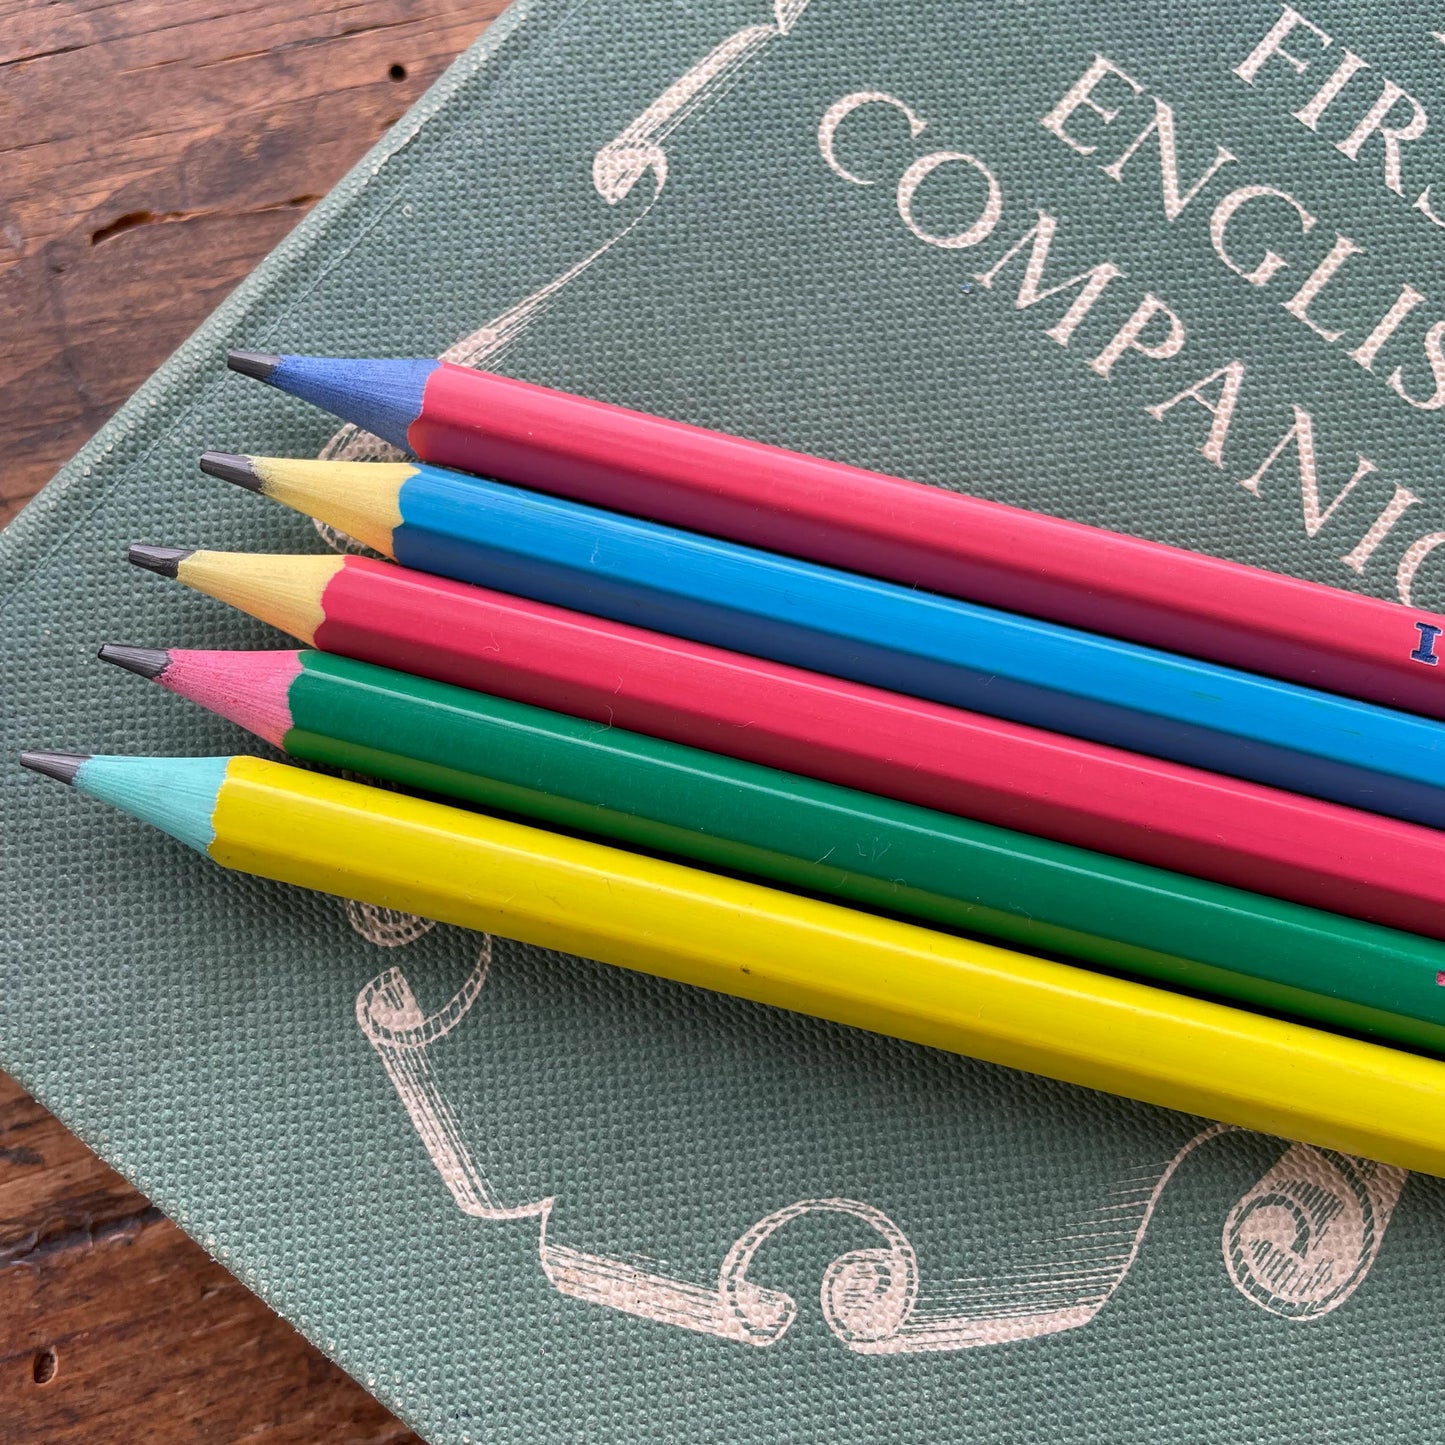 Pencils - Correct English Grammar - Set of 5